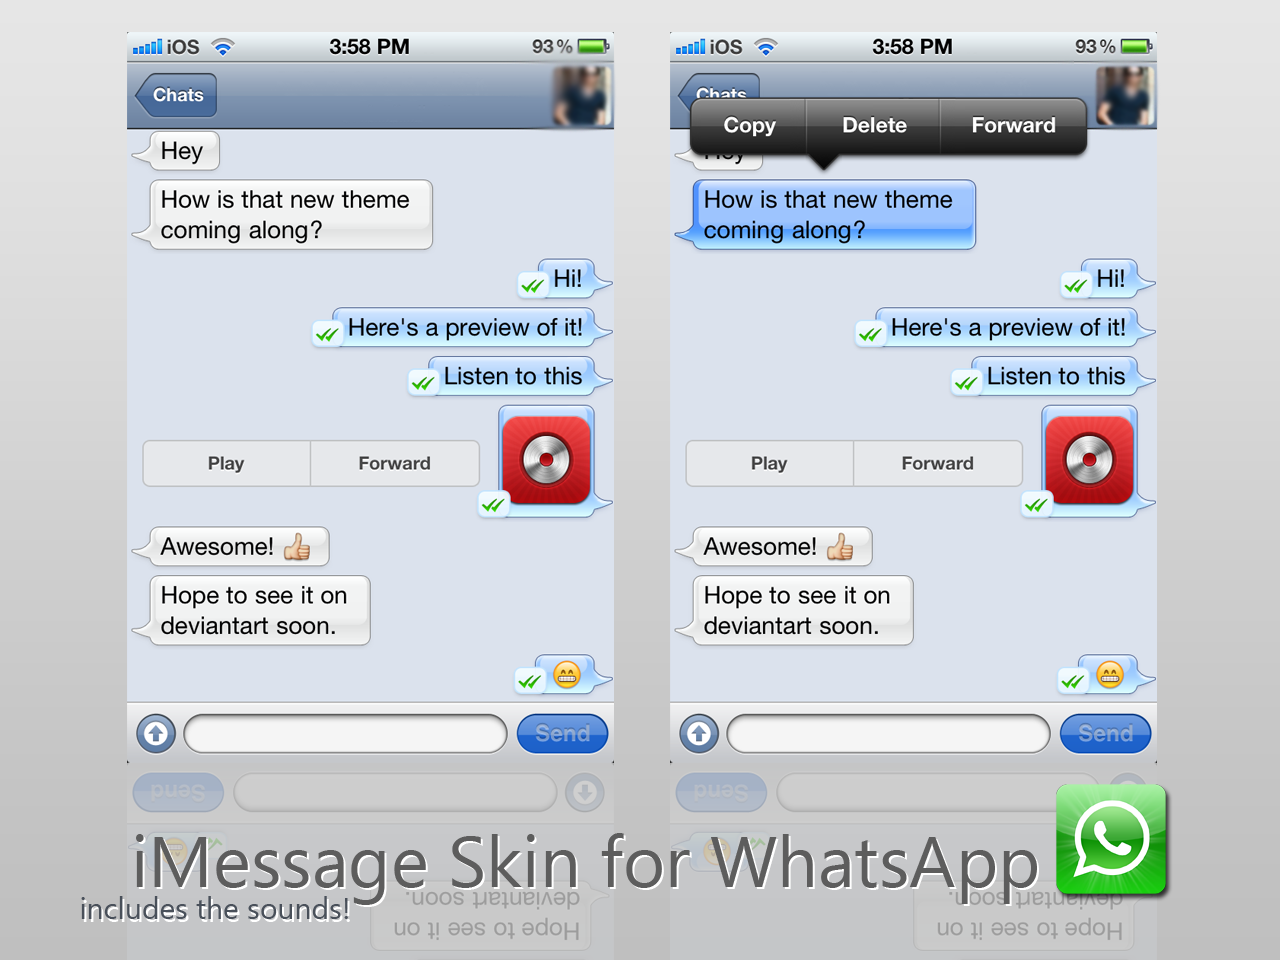 iMessage Skin for WhatsApp